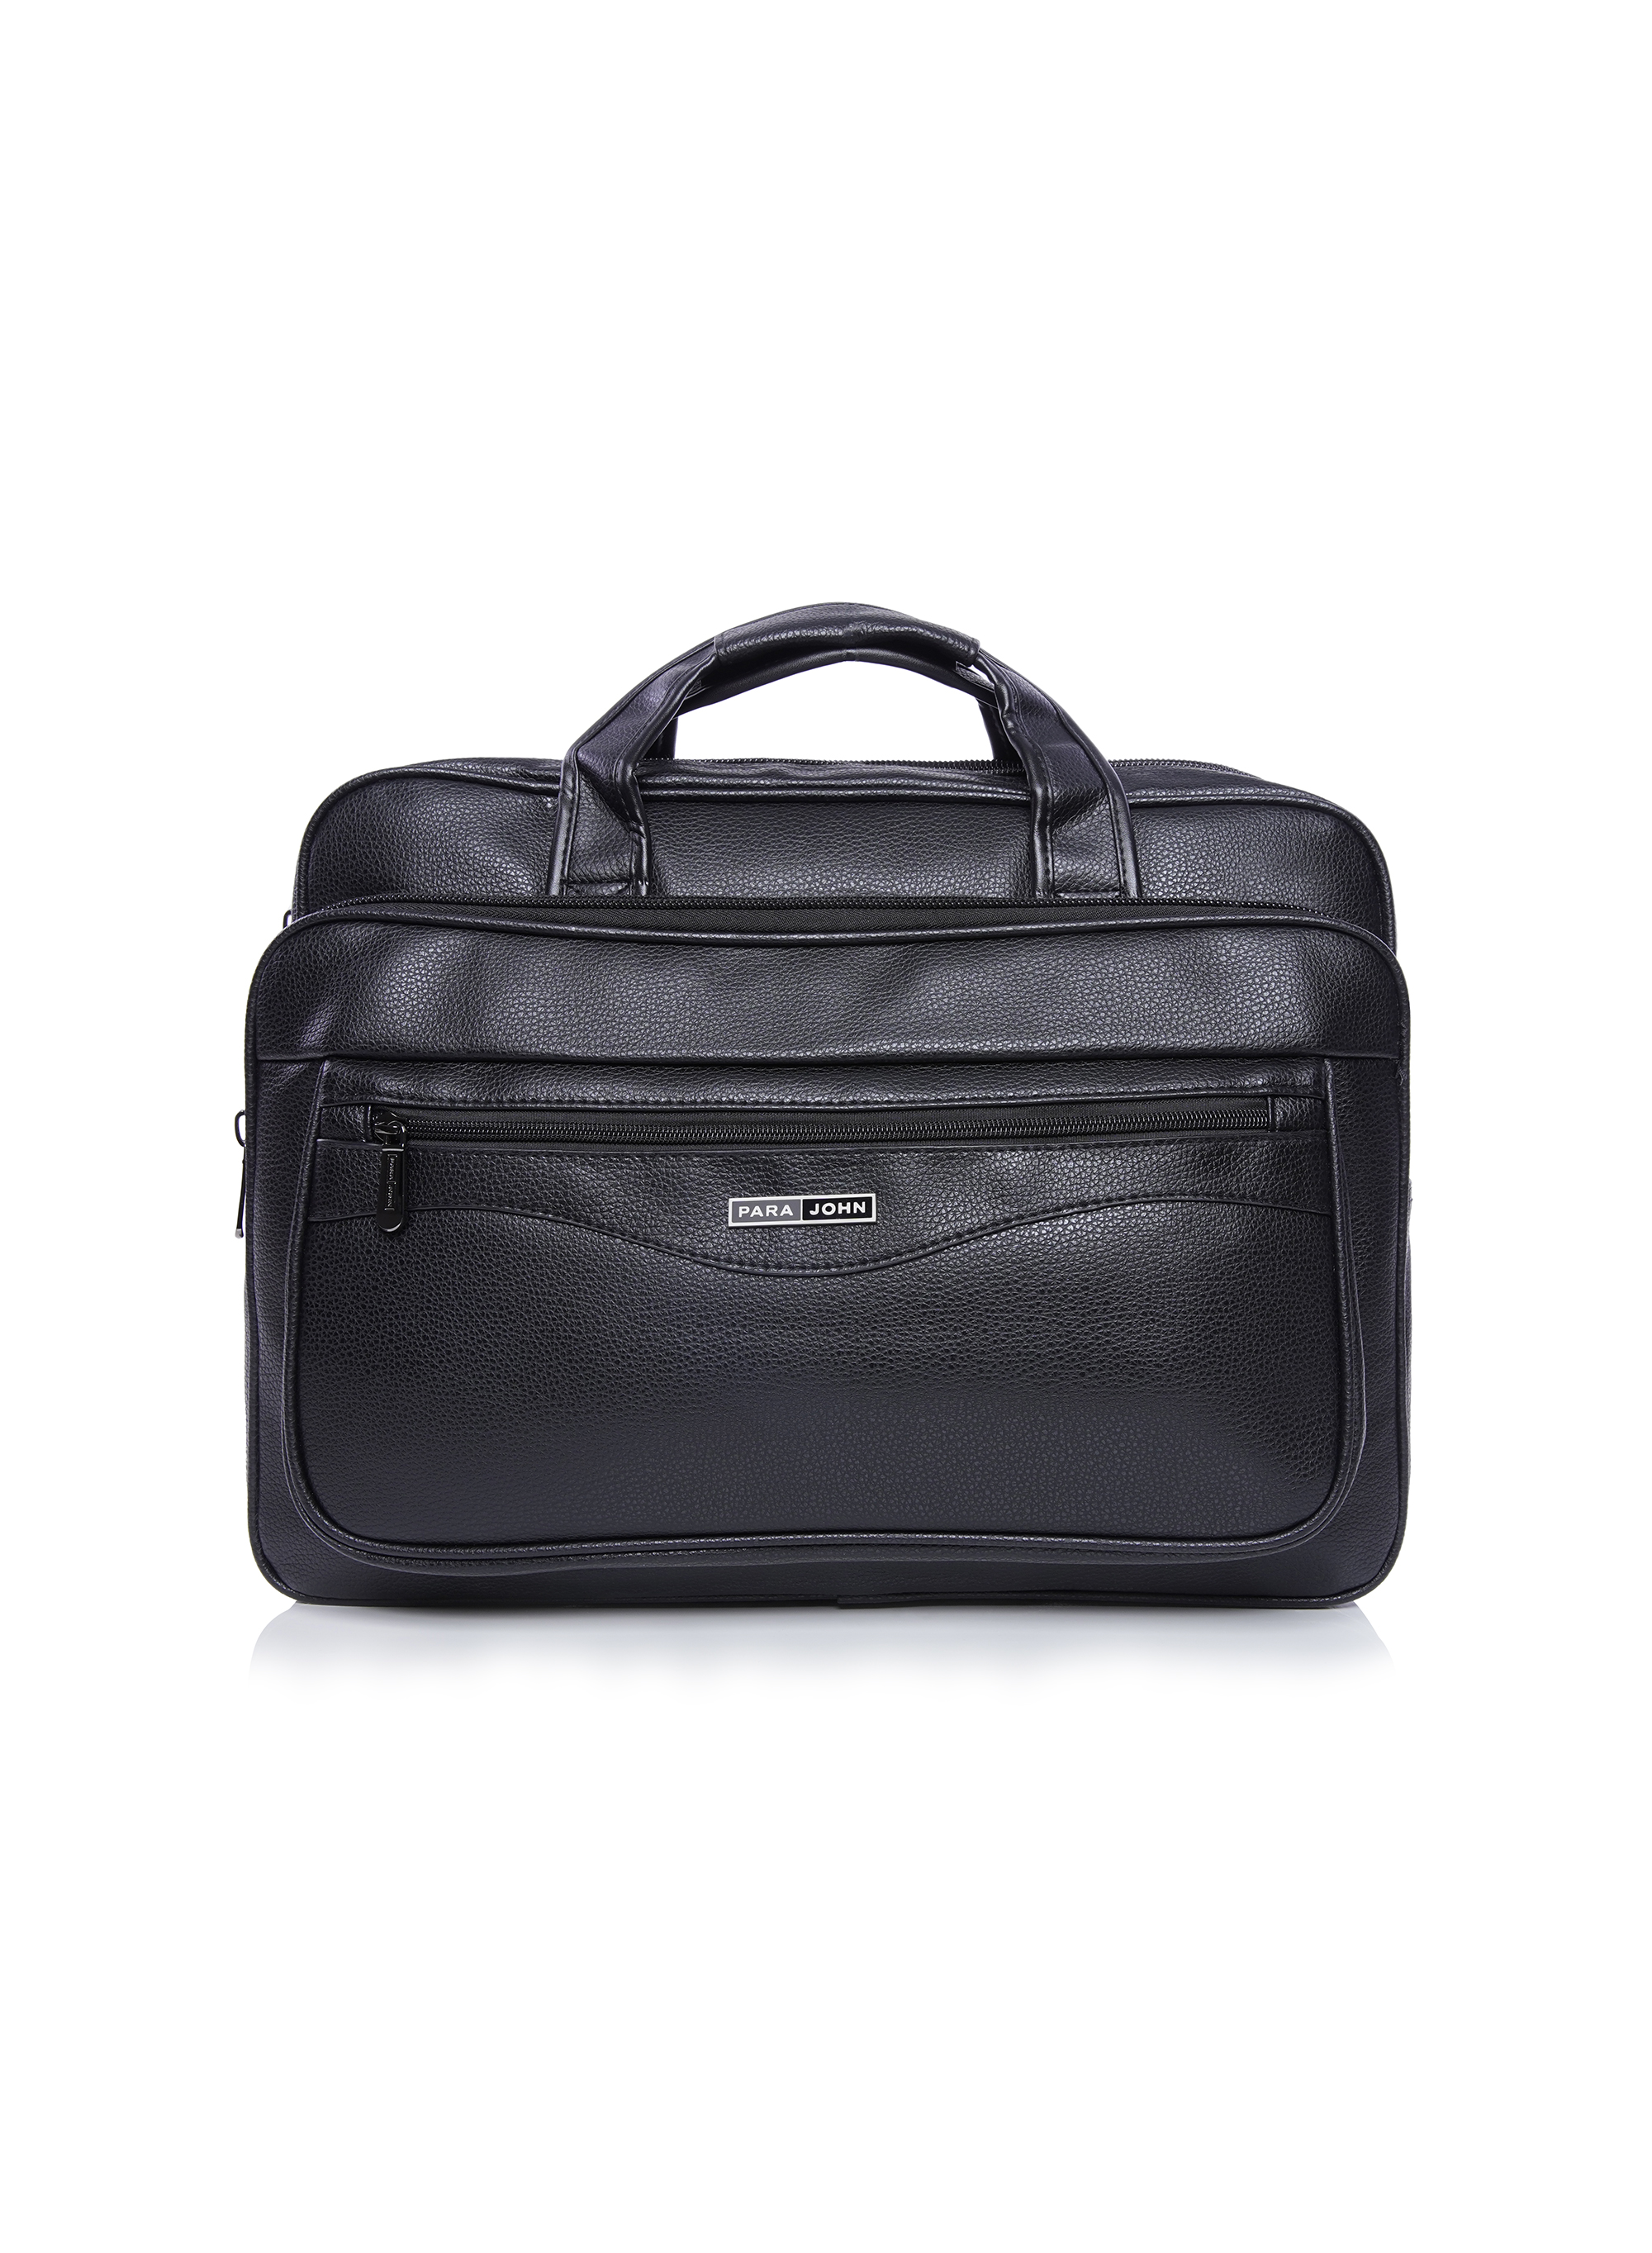 Parajohn Secure Business Professional Multi-Purpose Travel Laptop Bag With Hideaway Handles, Cross Shoulder Strap, Protective Padding / Office Bag, Macbook Bag